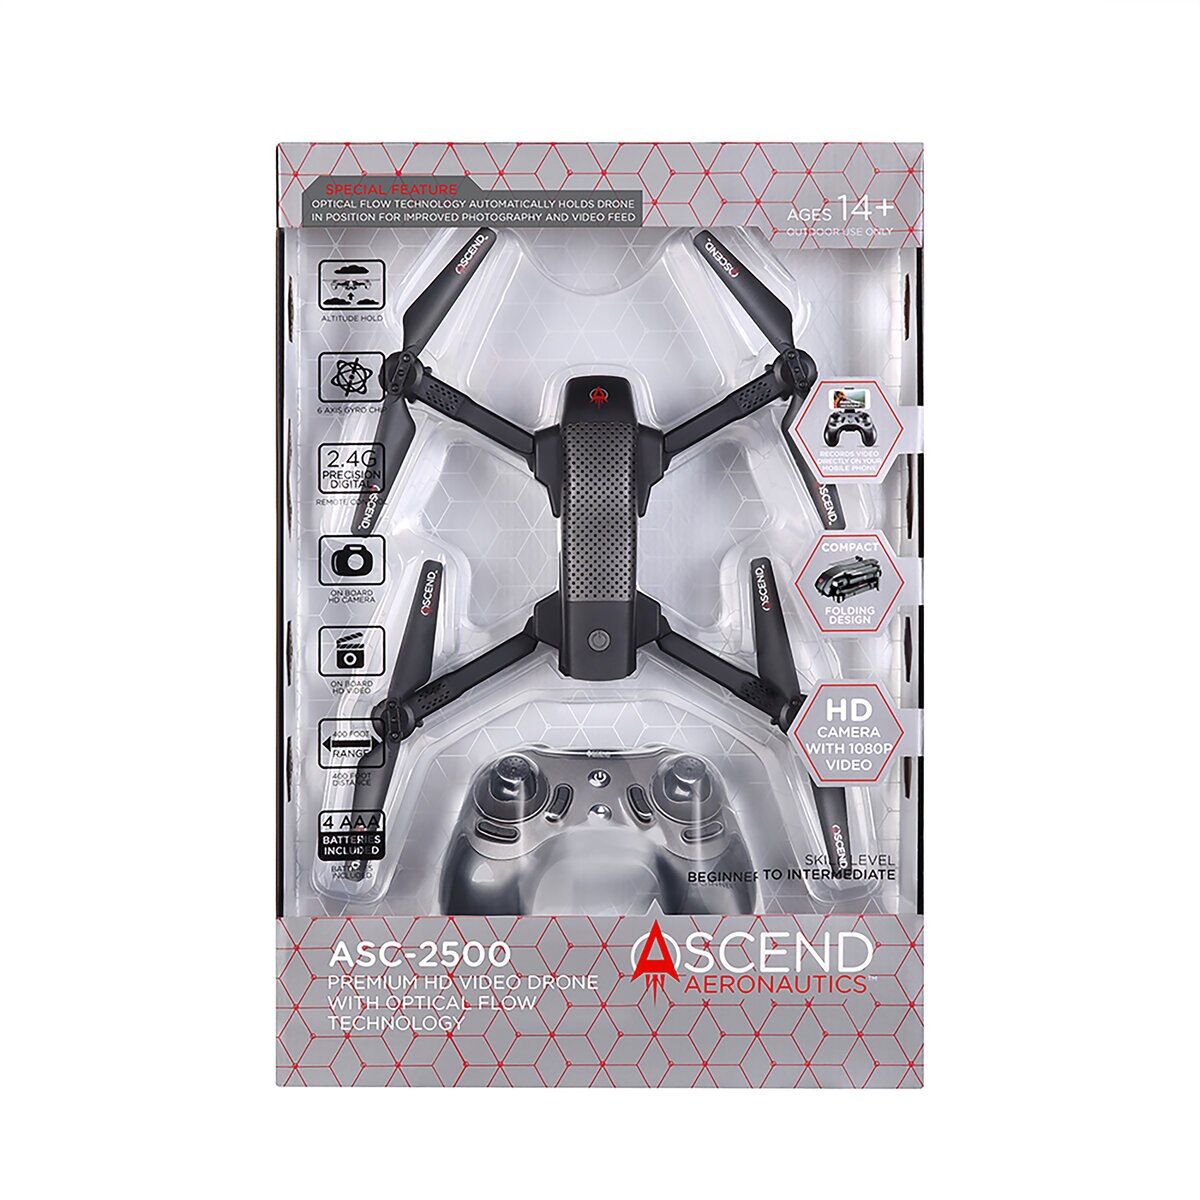 Ascend Aeronautics ASC-2500 Premium HD Video Dron con tecnología de flujo óptico